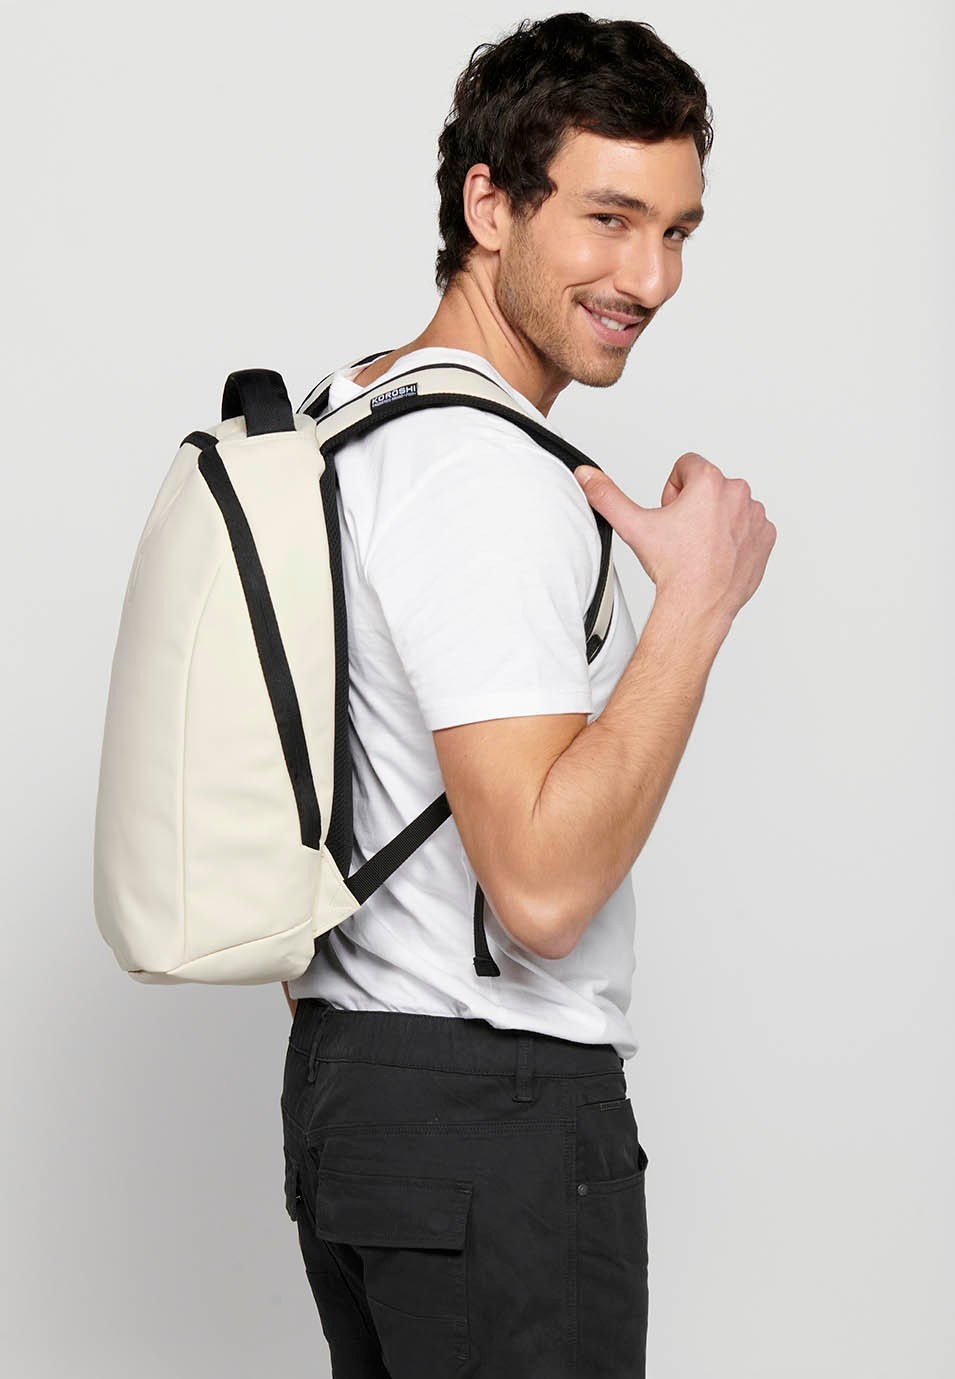 Koröshi Backpack with zipper closure and interior laptop pocket in Ecru color 9